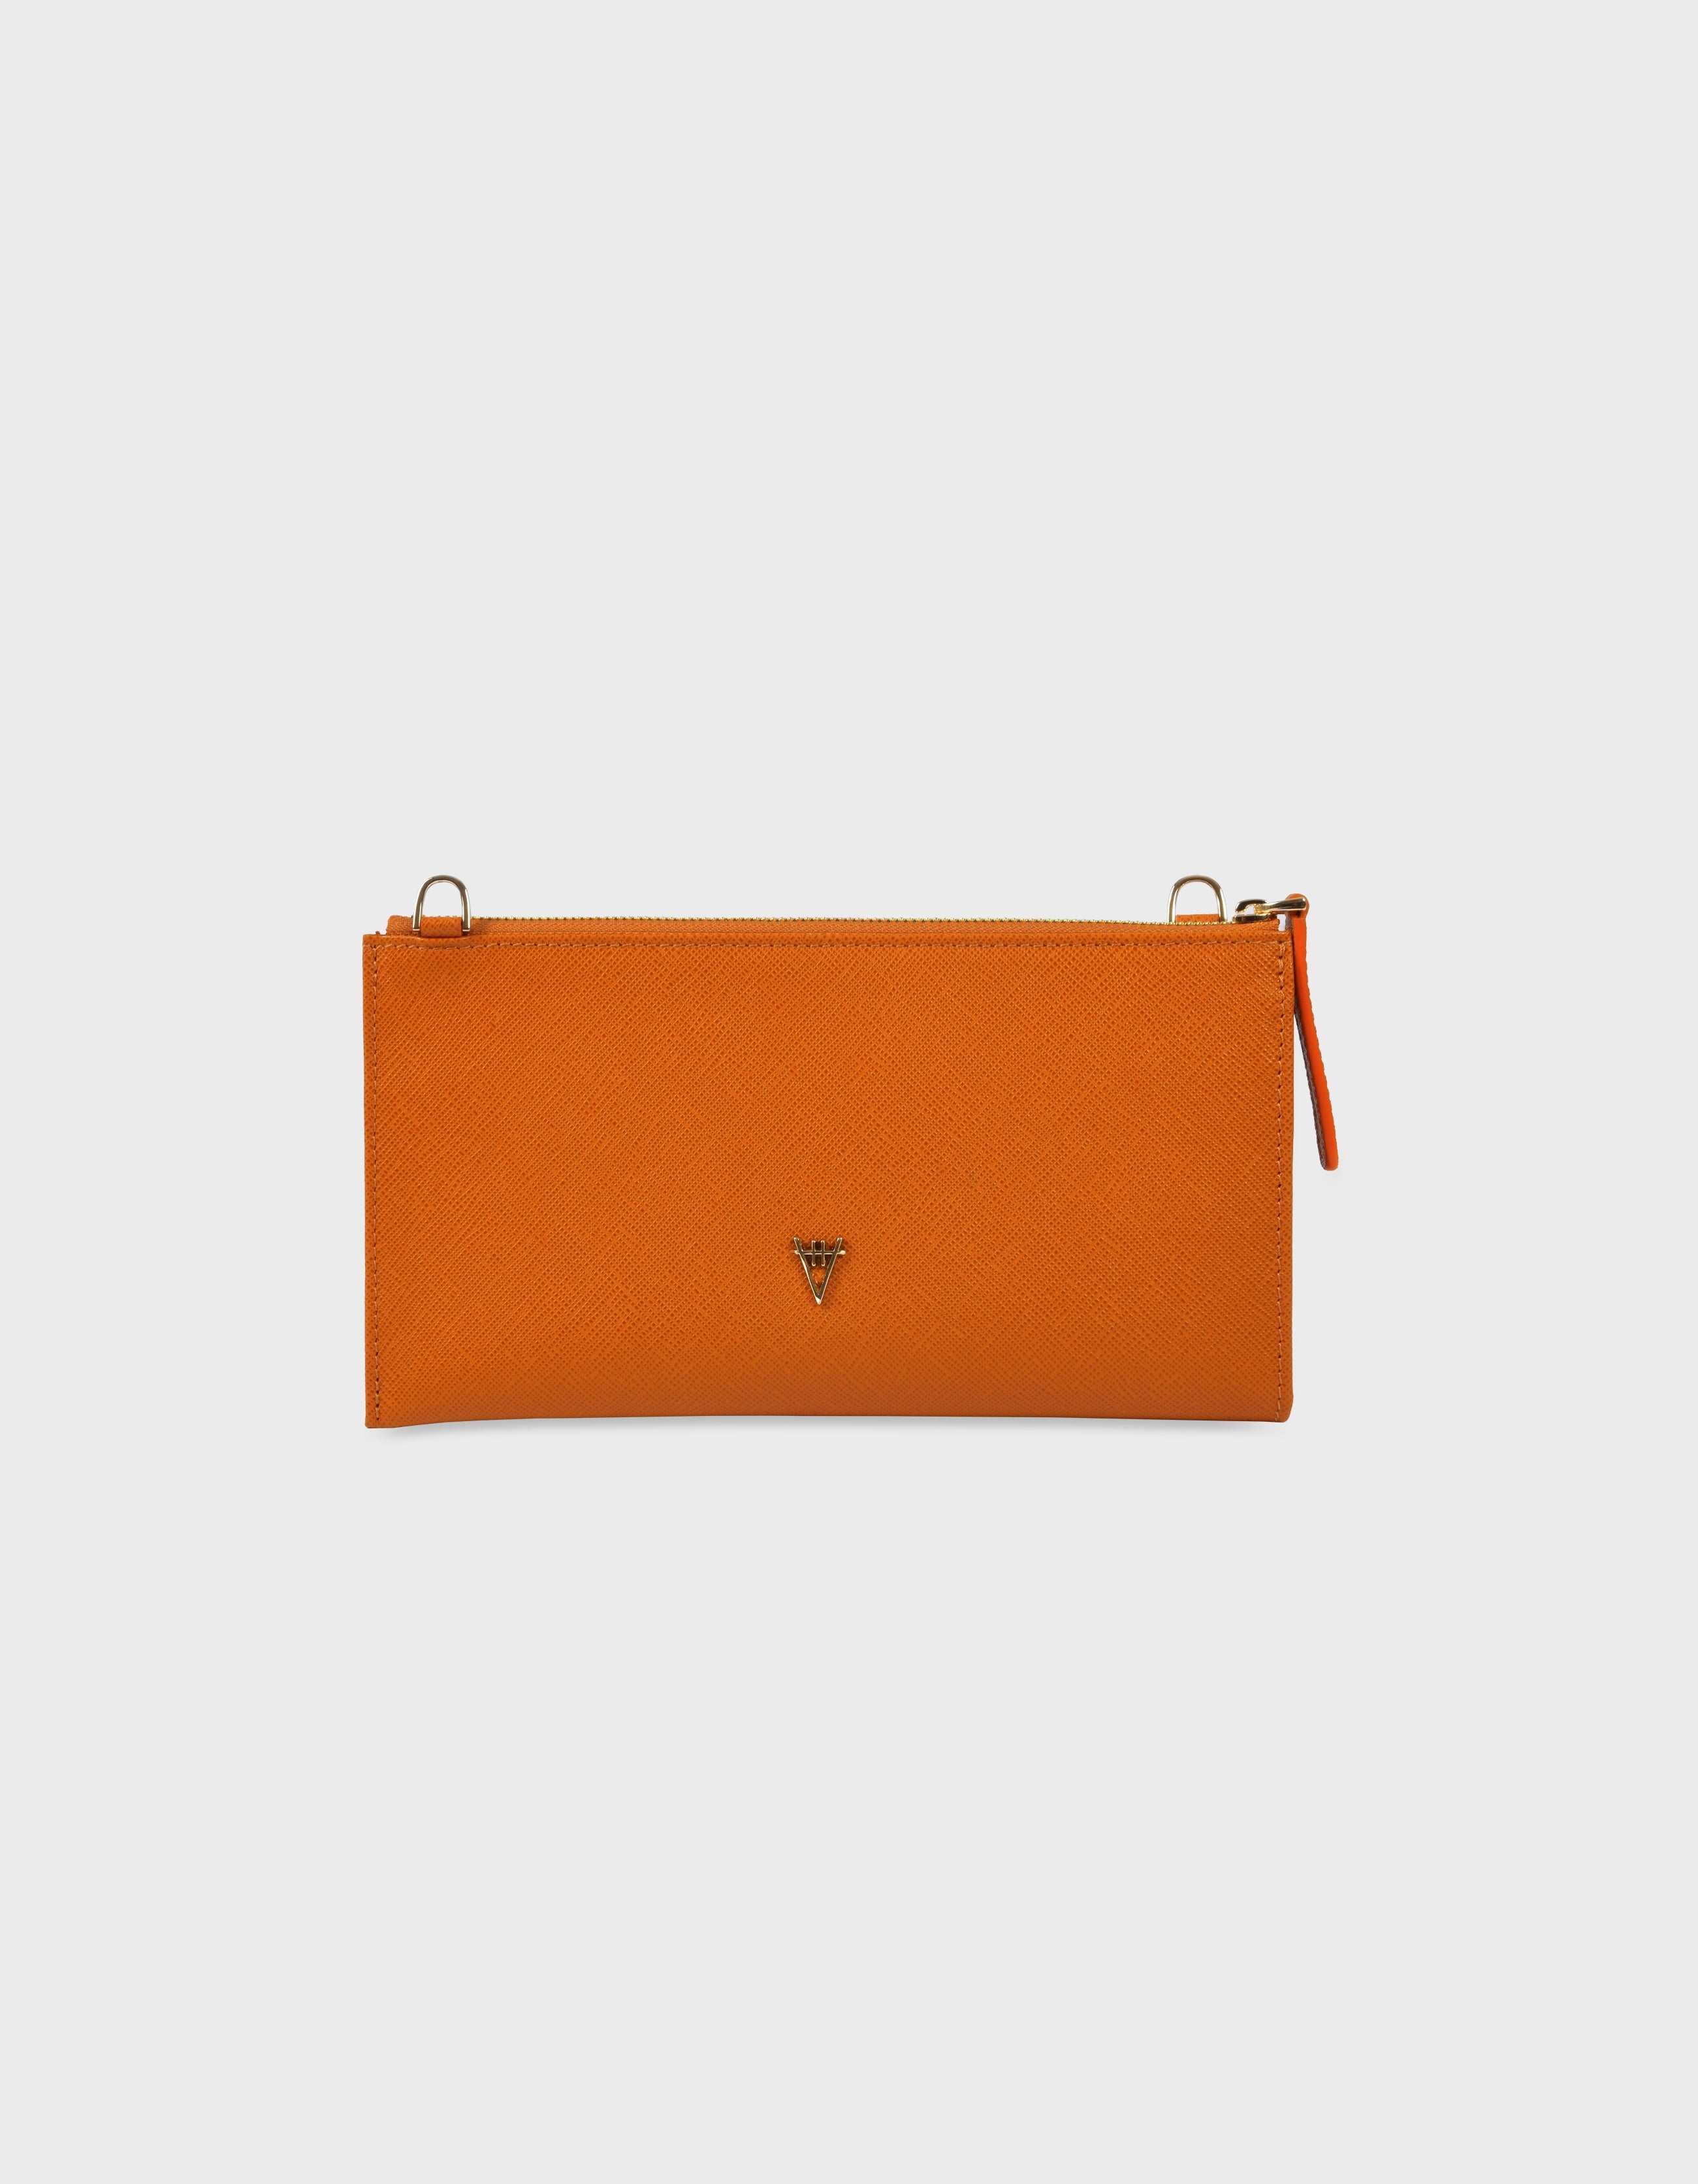 HiVa Atelier | Omnia Chain Bag & Clutch Orange | Beautiful and Versatile